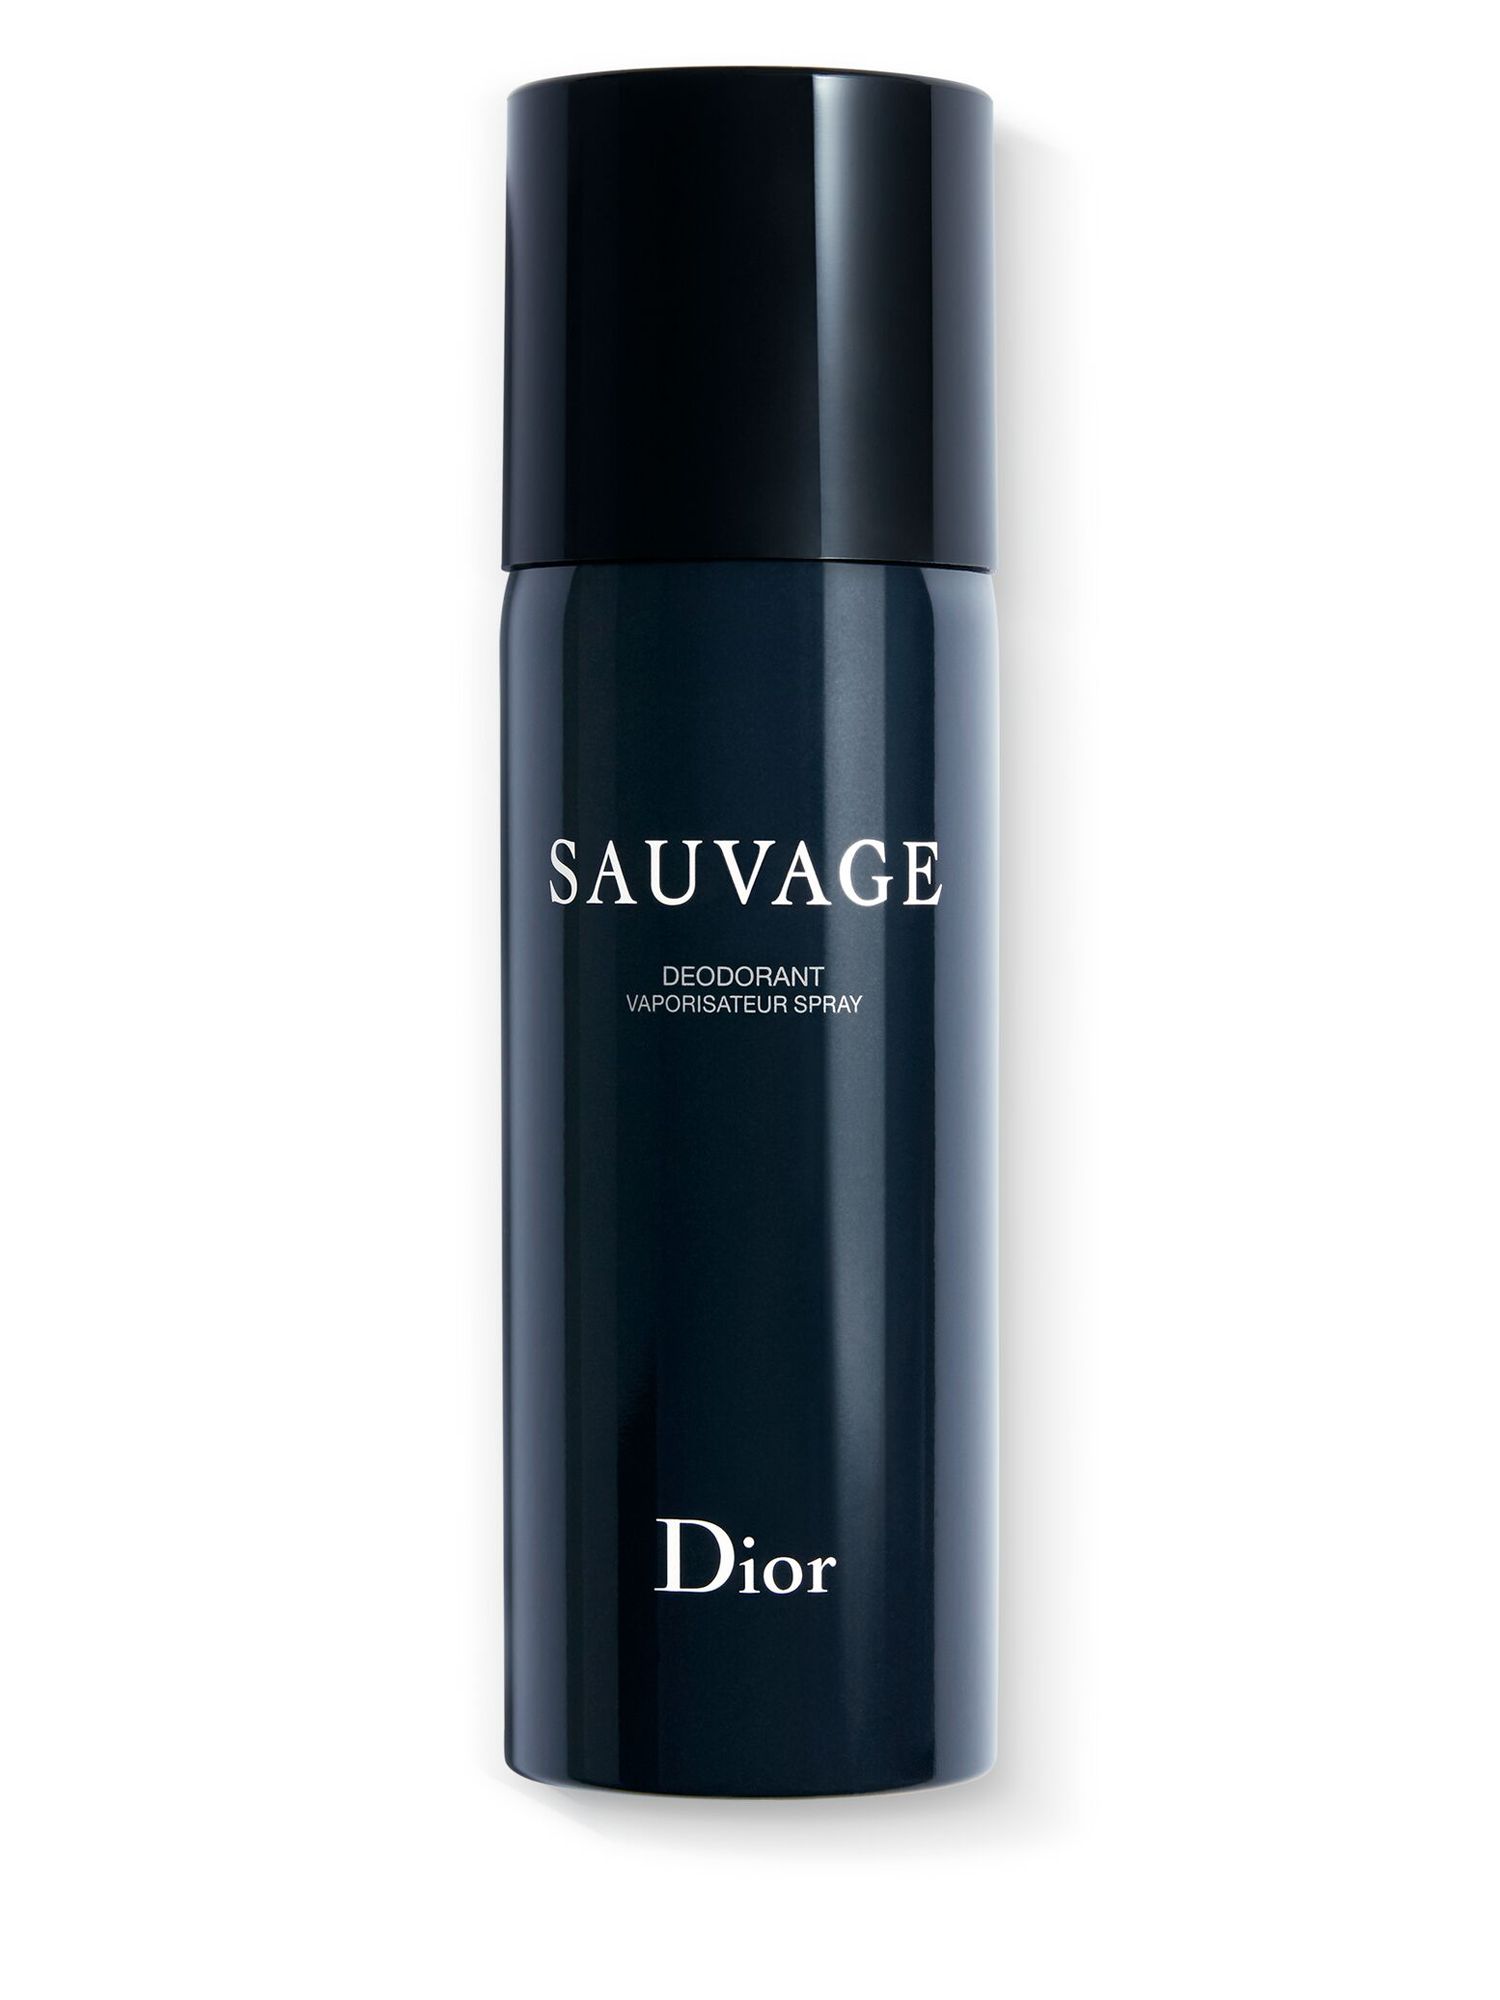 DIOR Sauvage Deodorant Spray, 150ml